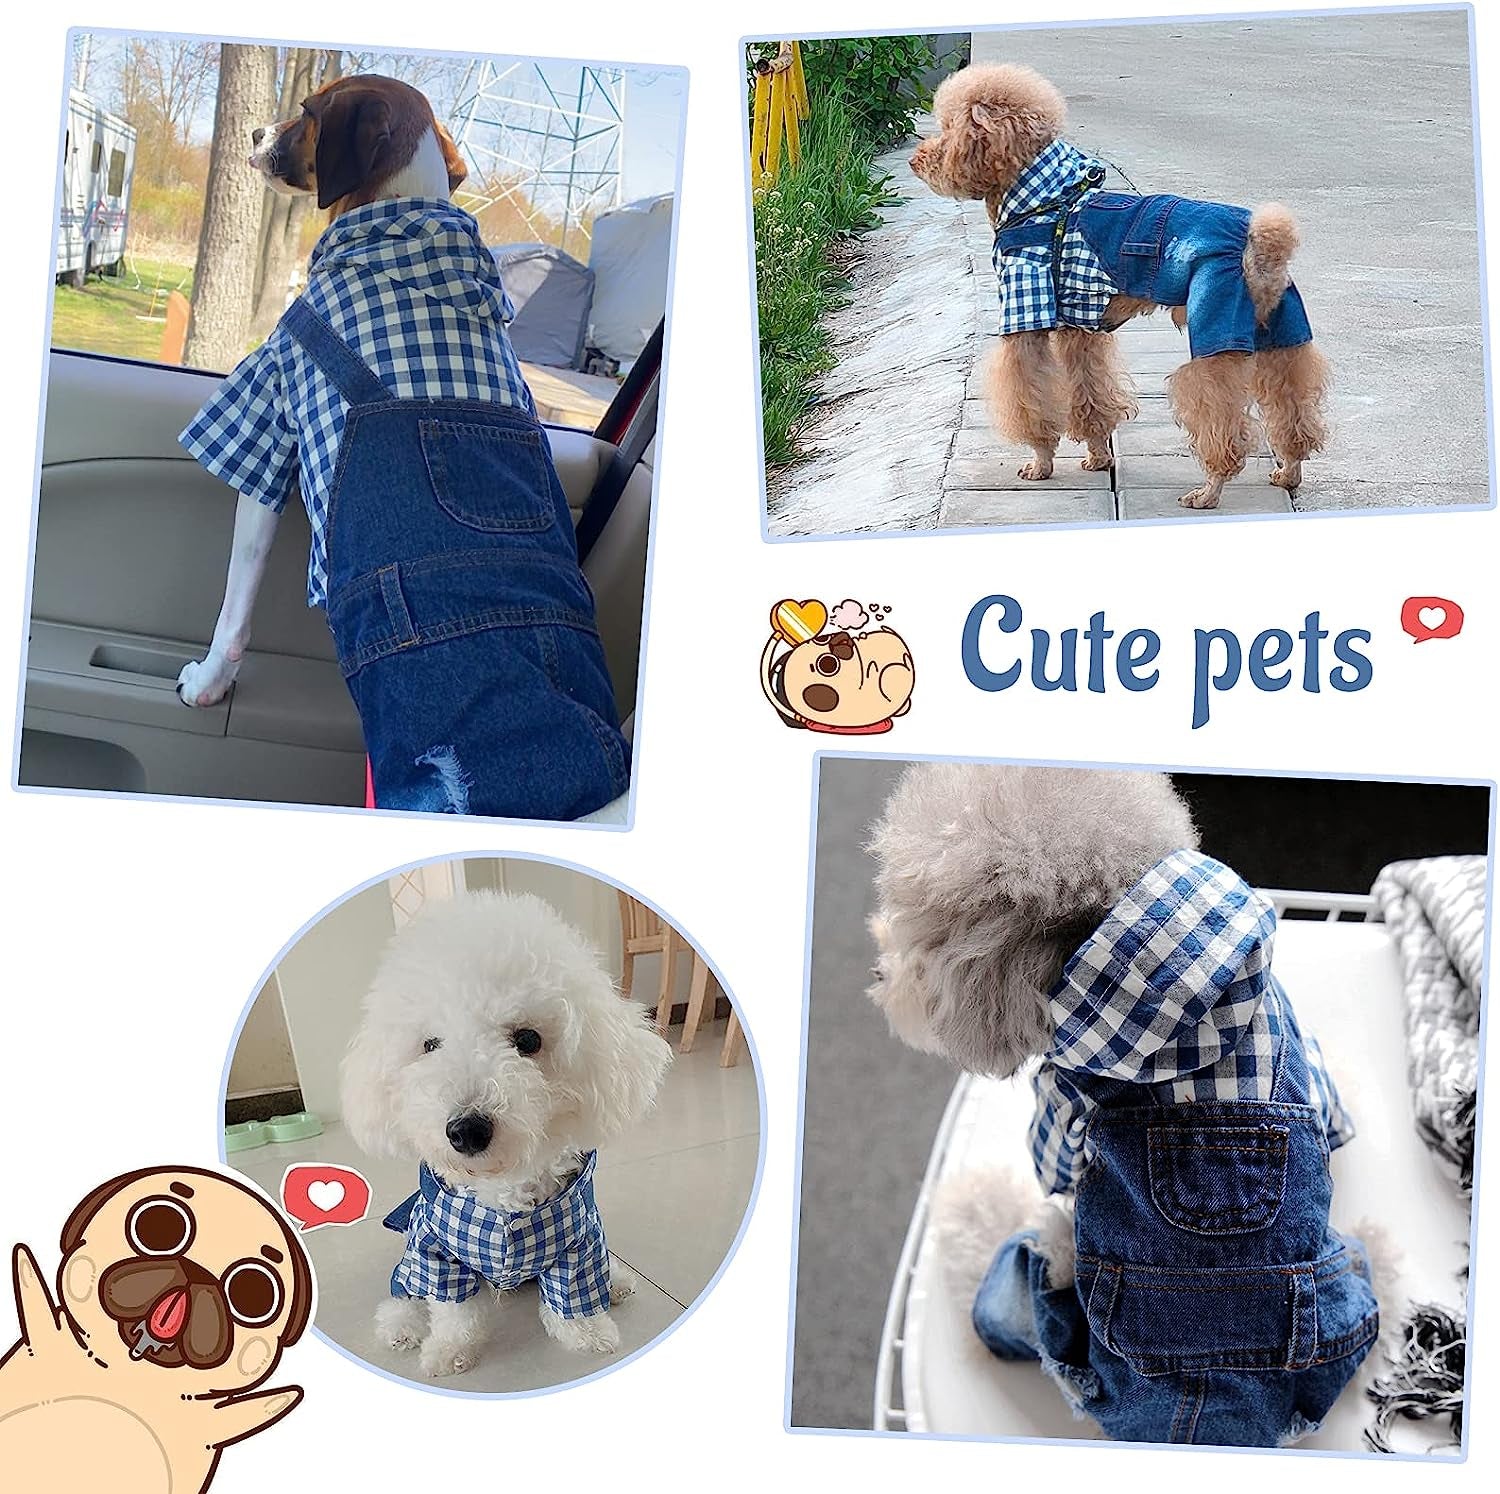 SILD Pet Denim Jumpsuit Dog Jeans Hoodies Cool Blue Coat Medium Small Dogs Classic Jacket Puppy Blue Vintage Washed Vests (S, Blue 1)